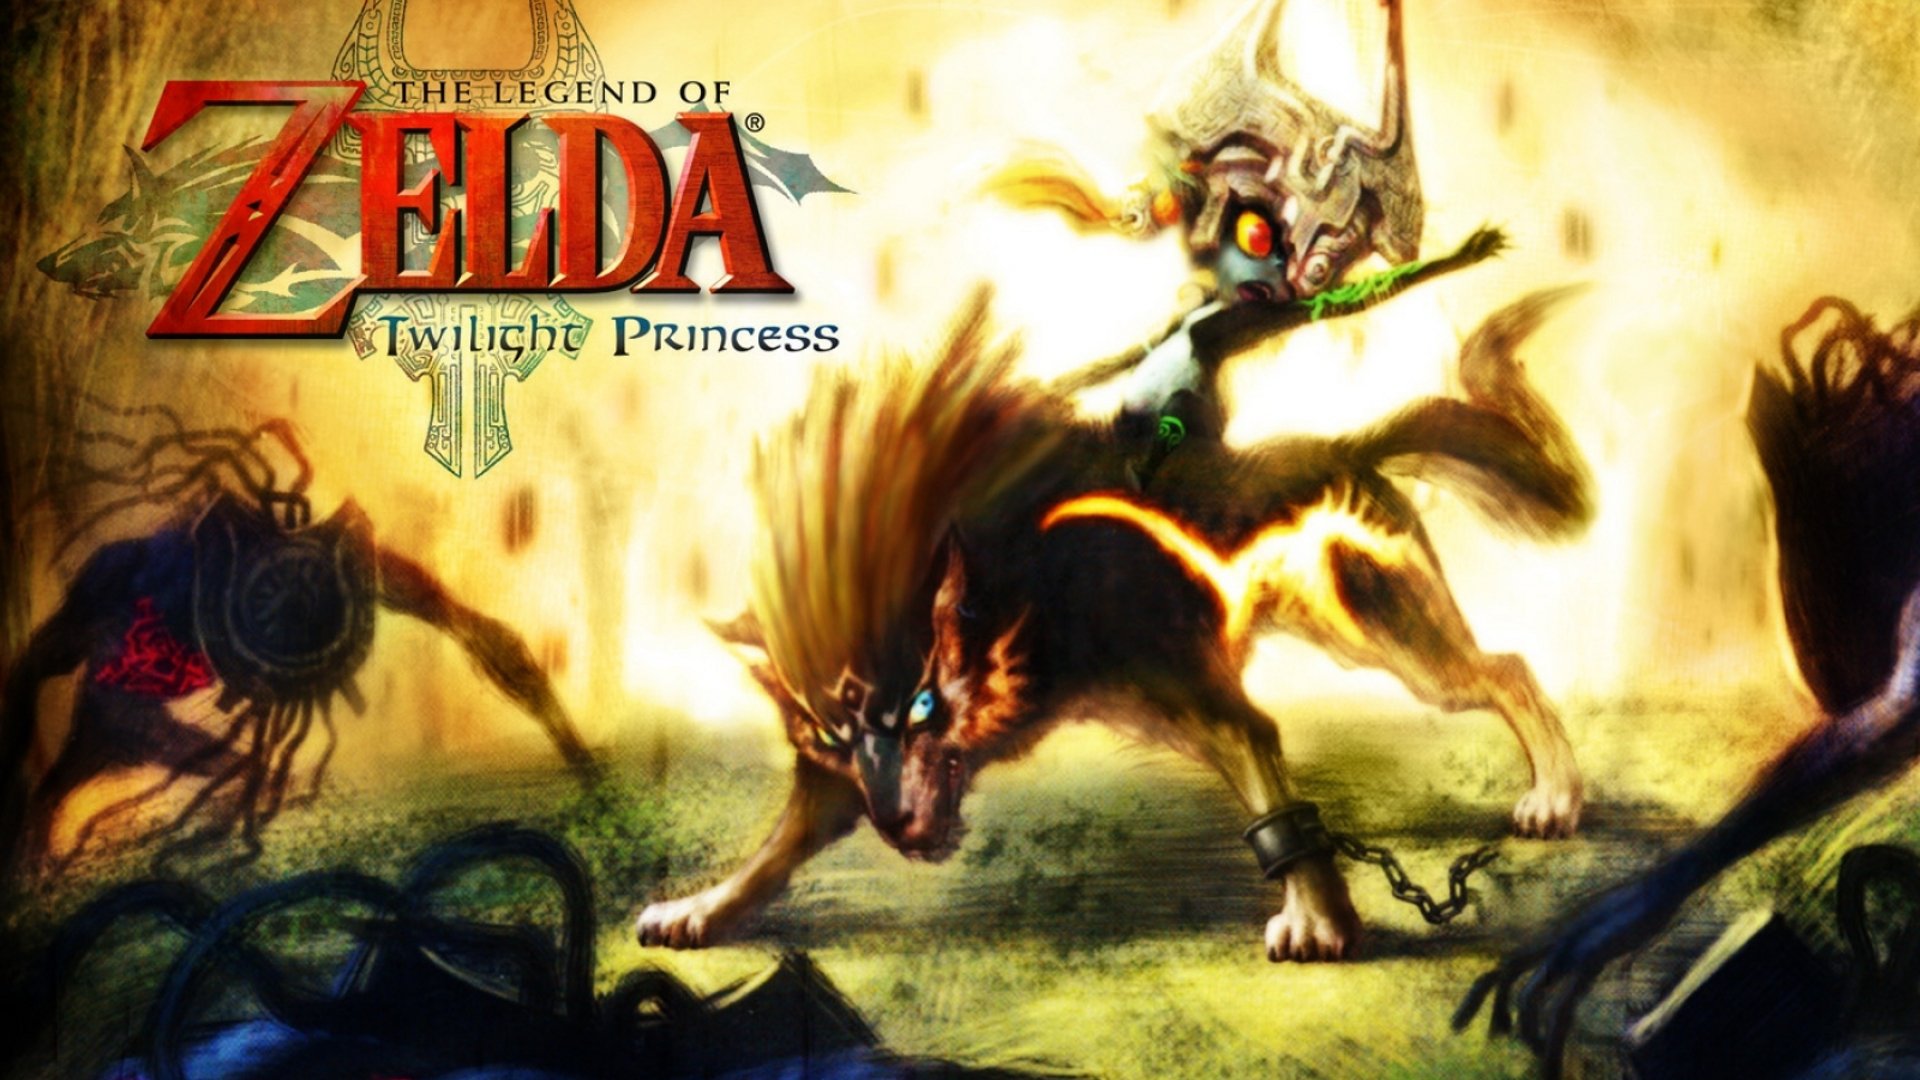 legende von zelda twilight princess wallpaper,action adventure spiel,dämon,computerspiel,erfundener charakter,cg kunstwerk